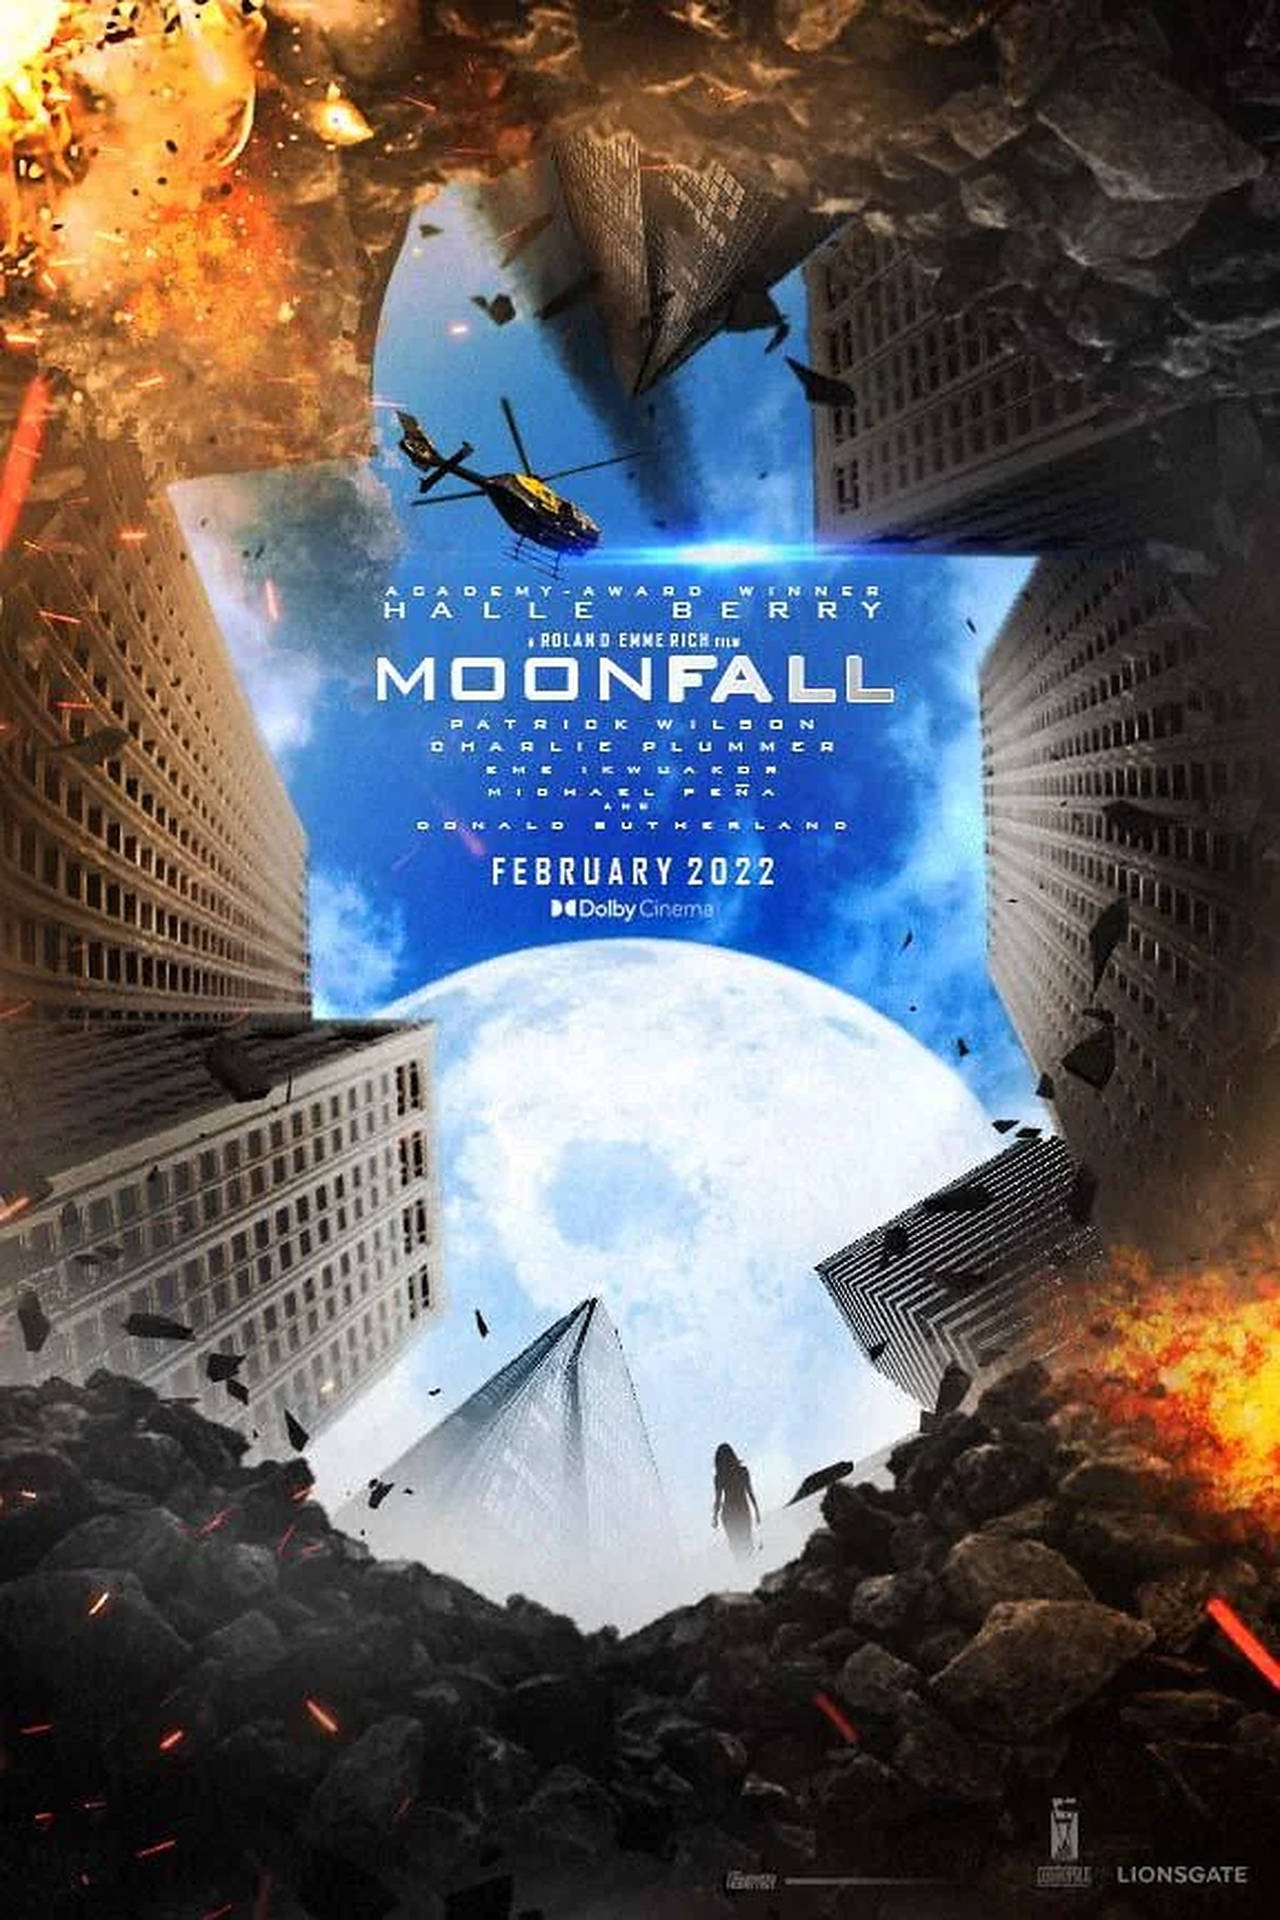 Moonfall Digital Poster